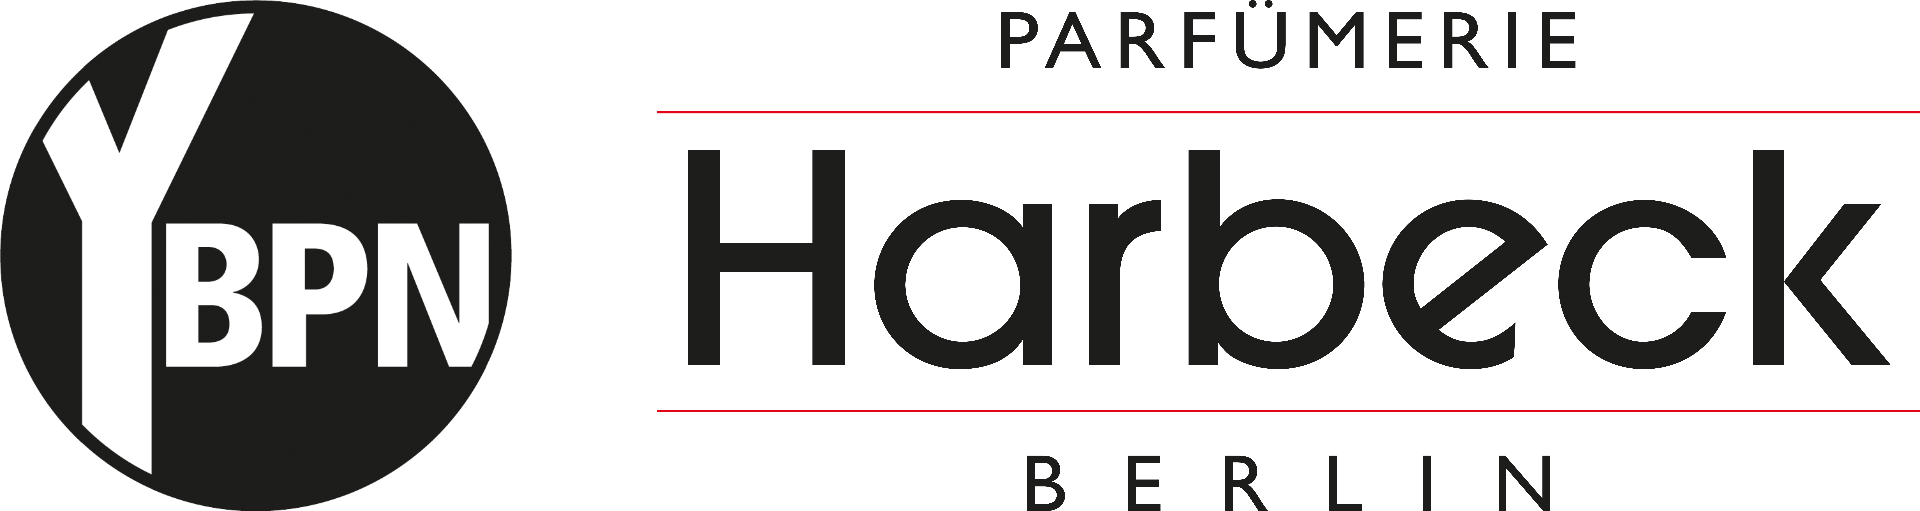 parfuemerie-harbeck.de